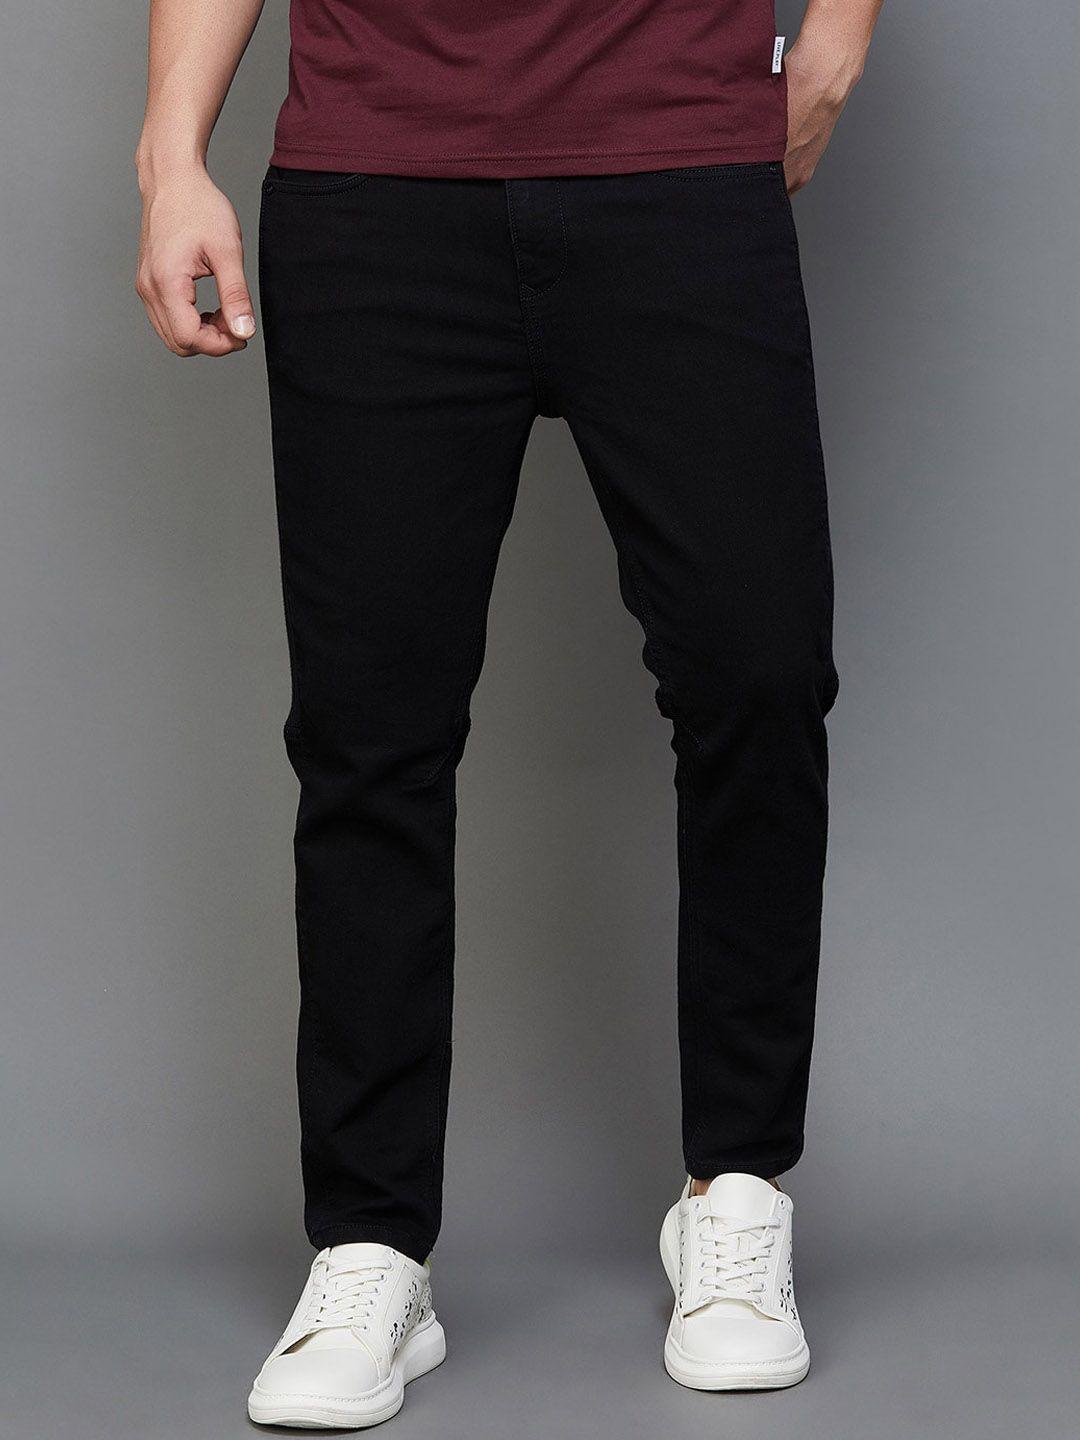 bossini-men-clean-look-mid-rise-dark-shade-cotton-regular-fit-jeans